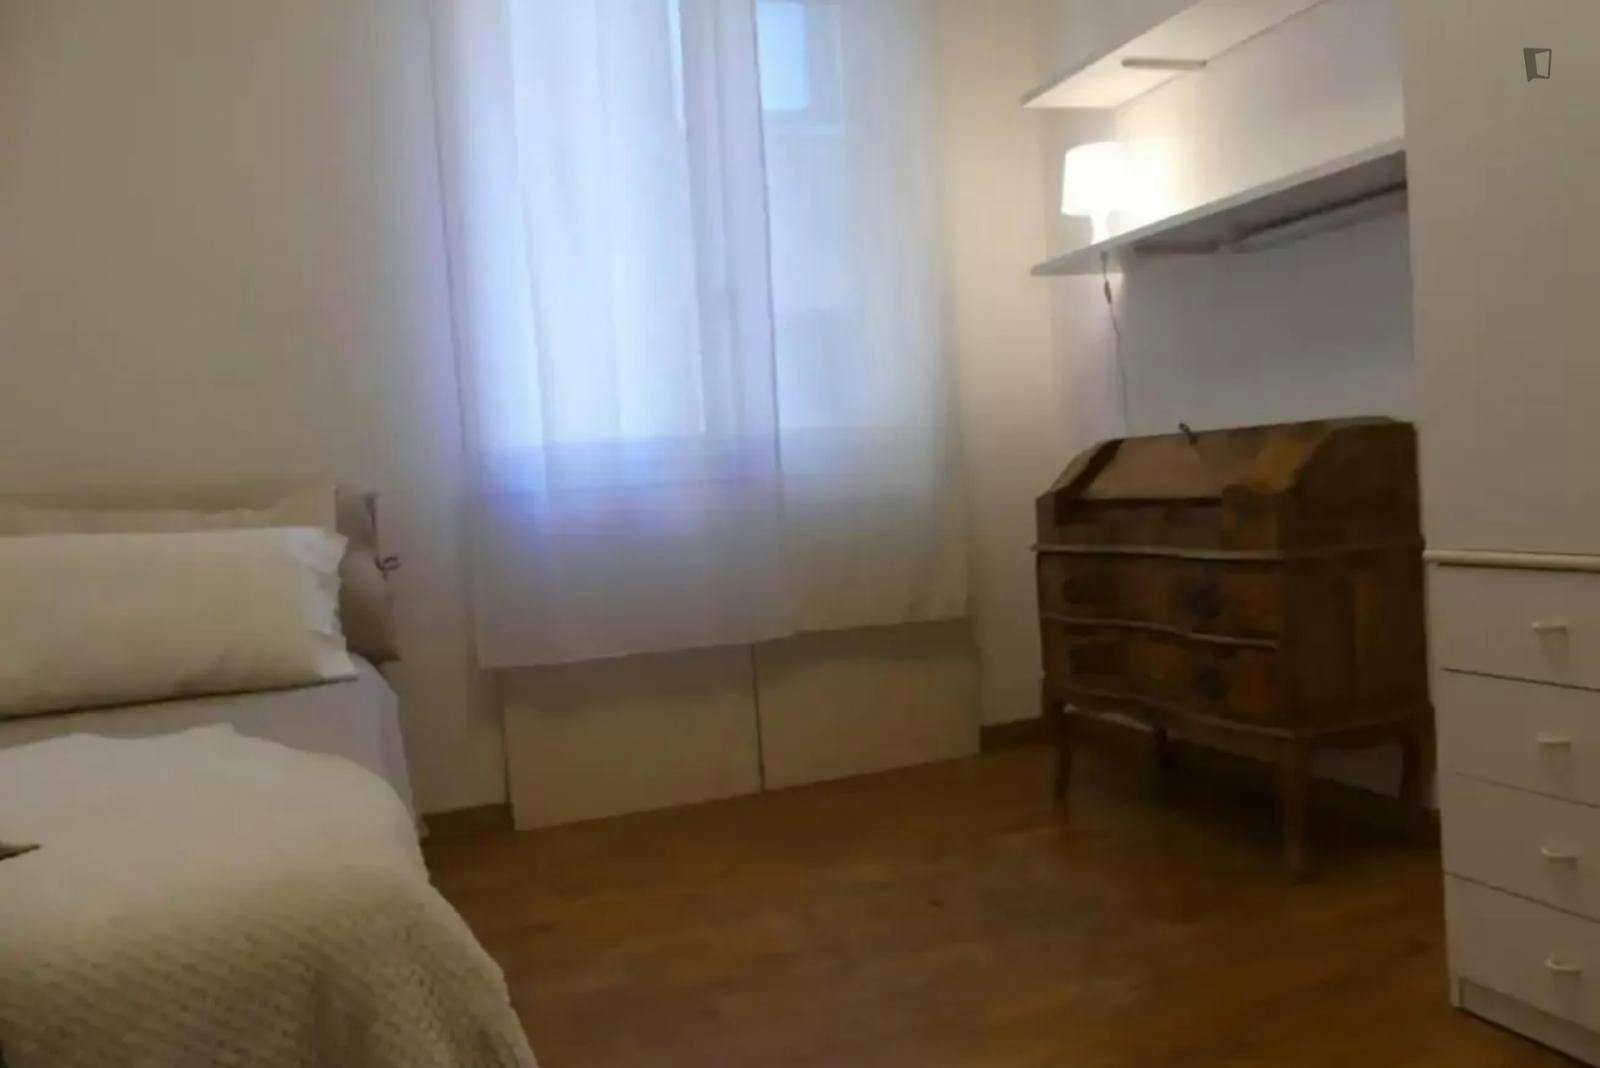 Neat 2-bedroom flat close to Como Lago train station